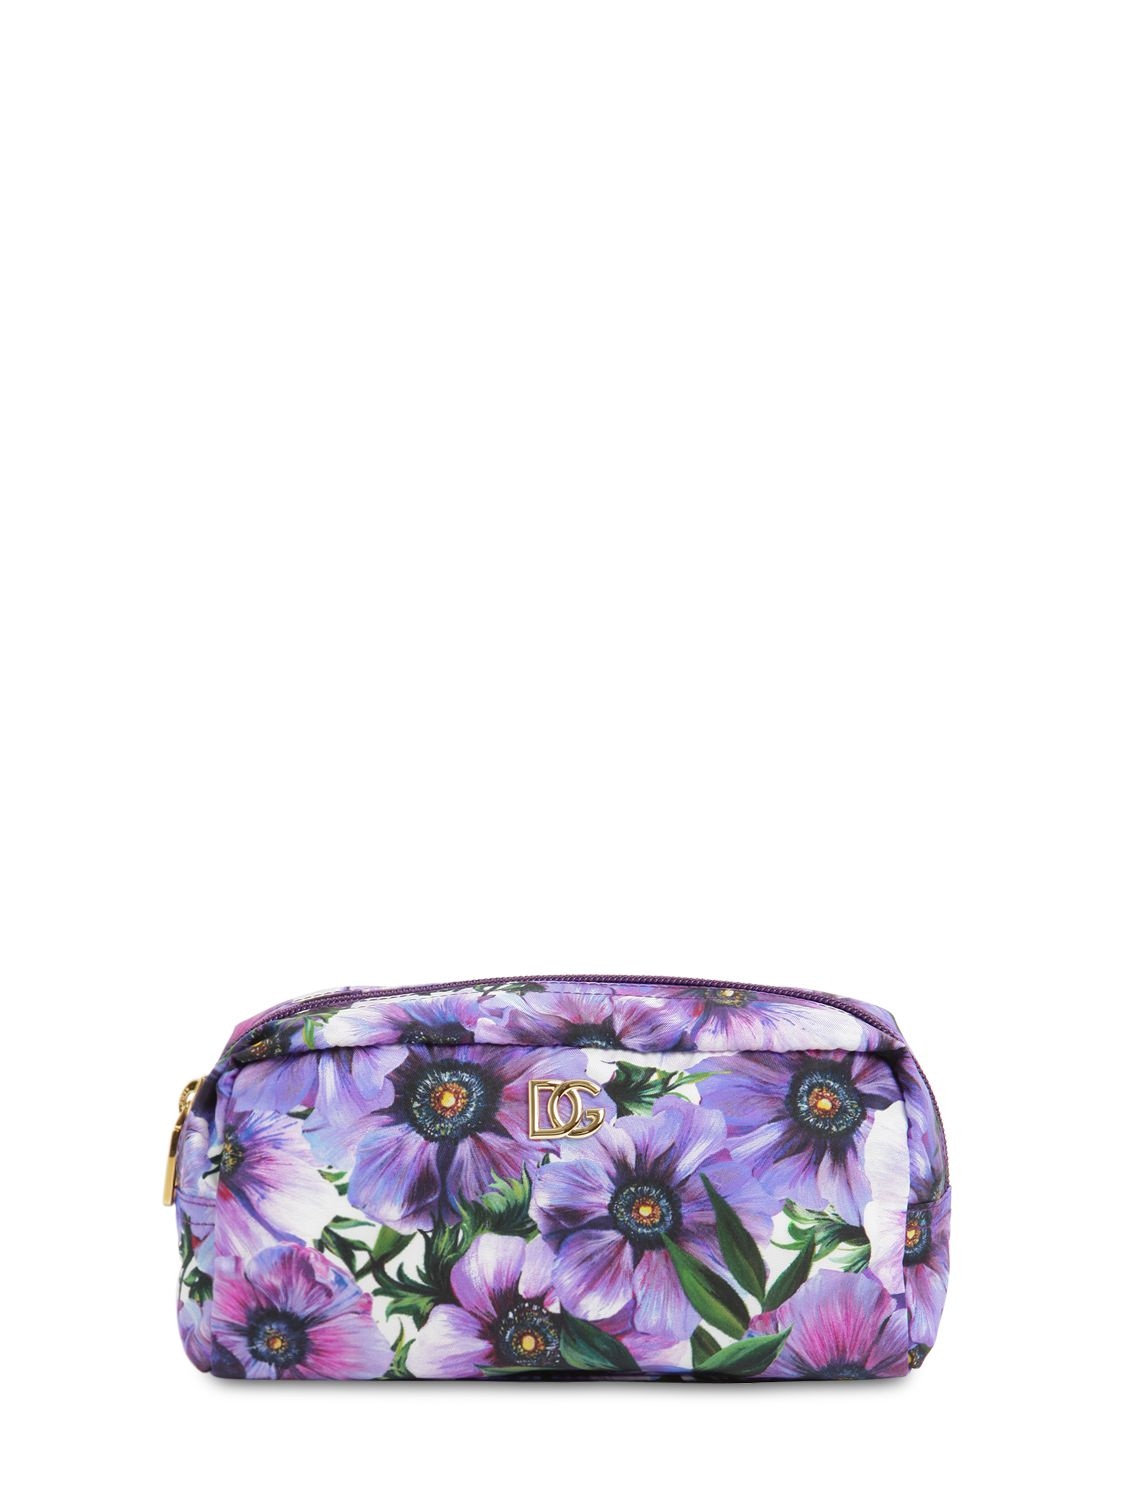 Dolce & Gabbana Printed Nylon Make Up Bag In Anemone